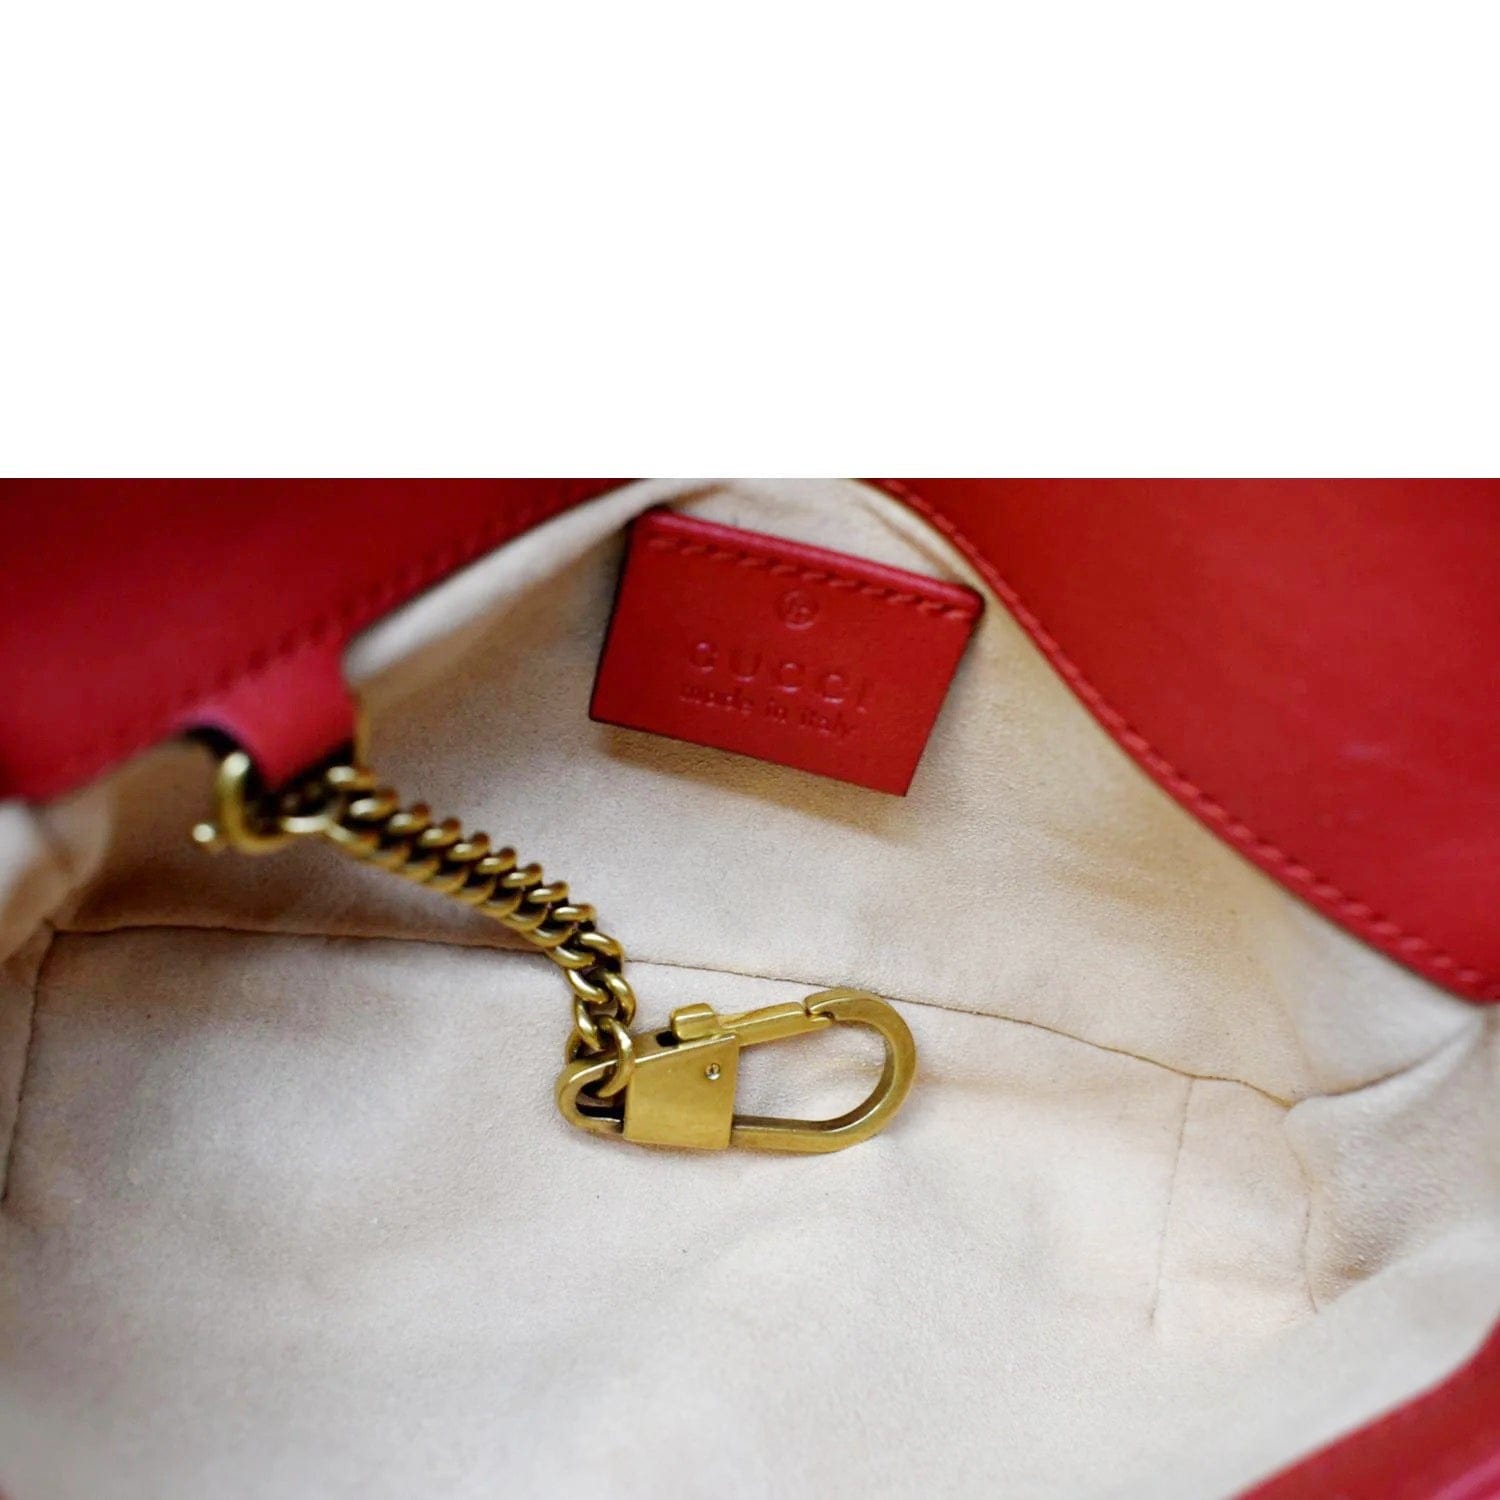 476433 GG Marmont Super Mini Flap Bag – Keeks Designer Handbags